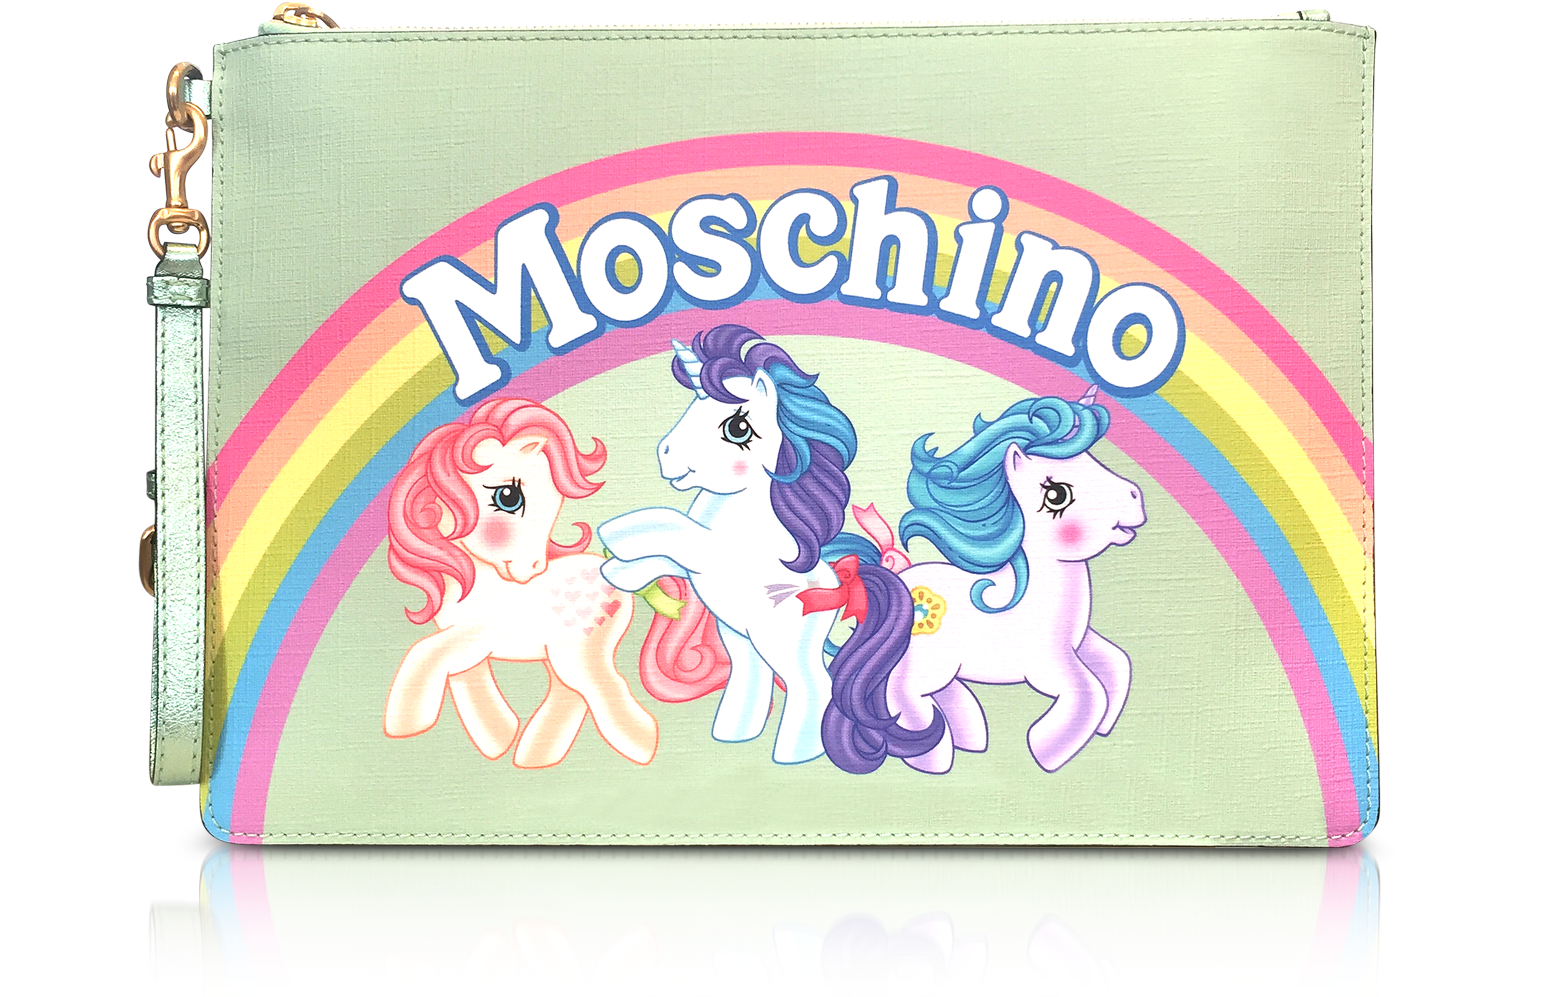 moschino my little pony